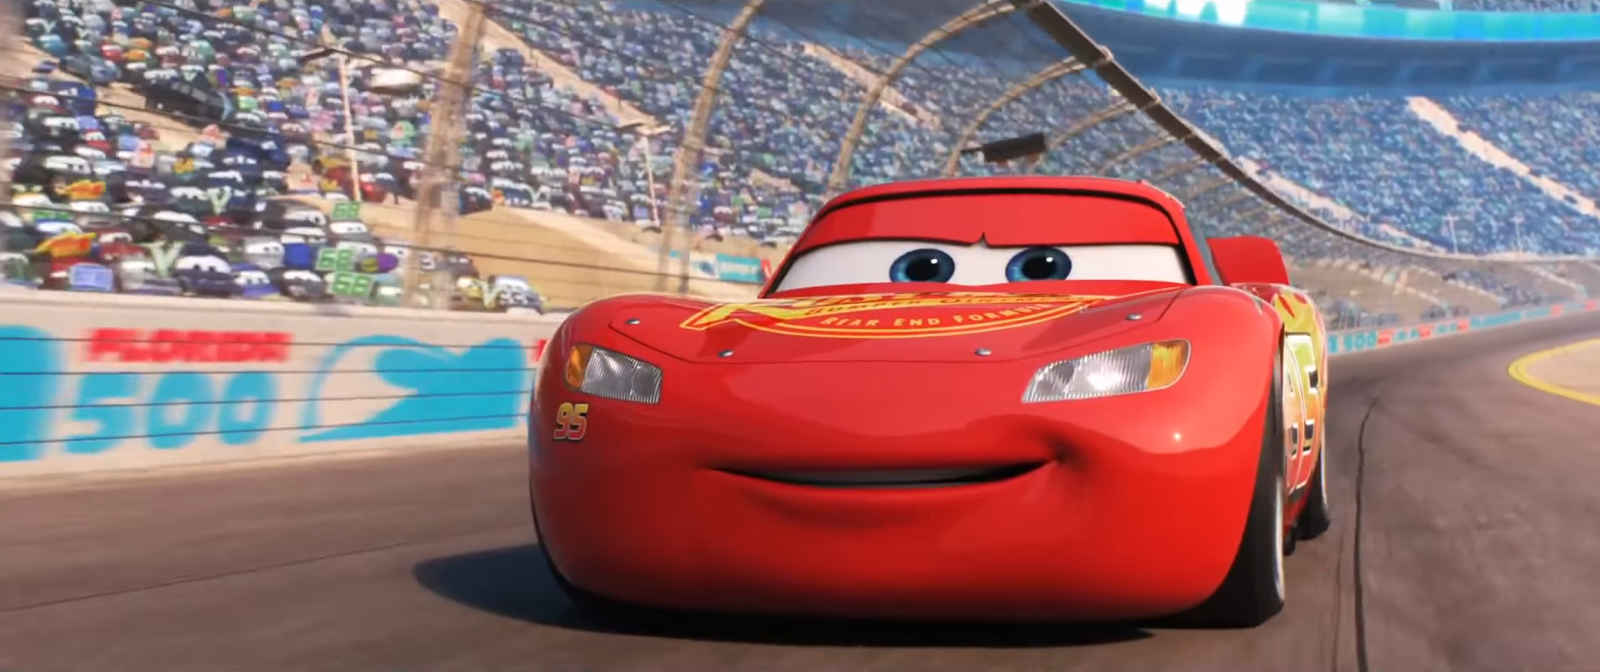 Disney·Pixar Cars 3 Soundtrack Review 